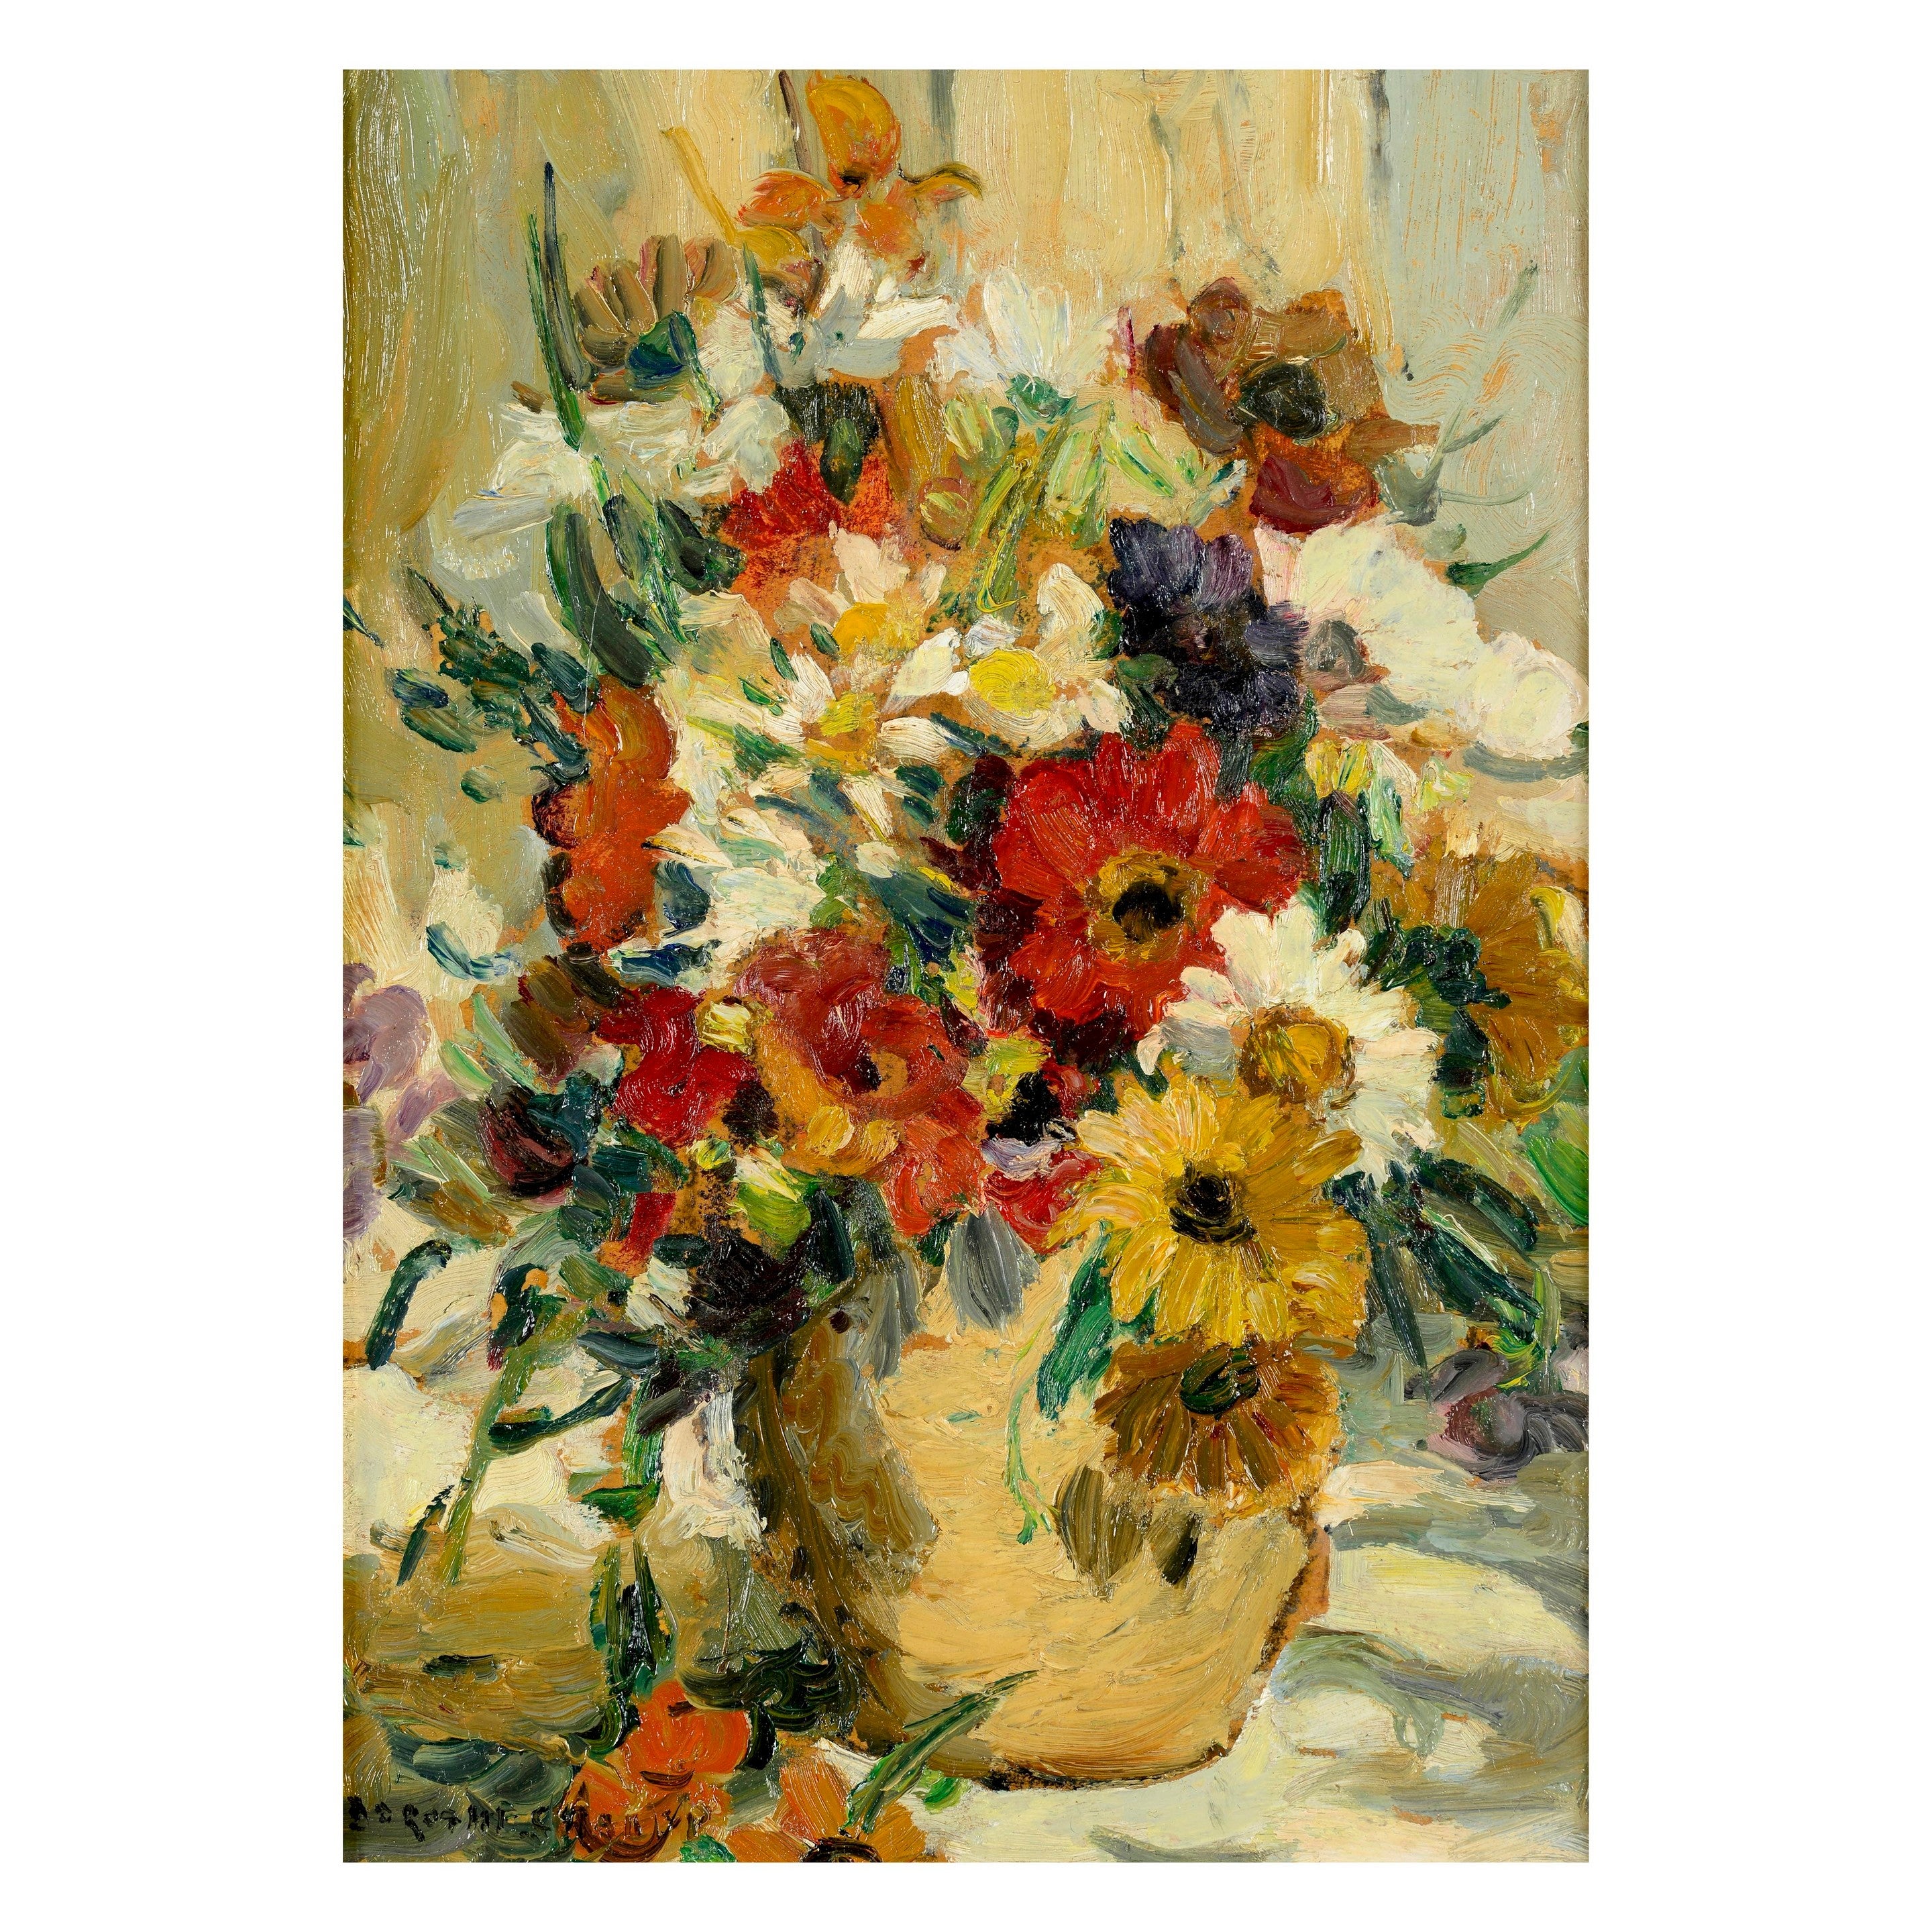 Dorothea Sharp RBA - “Flowers” For Sale